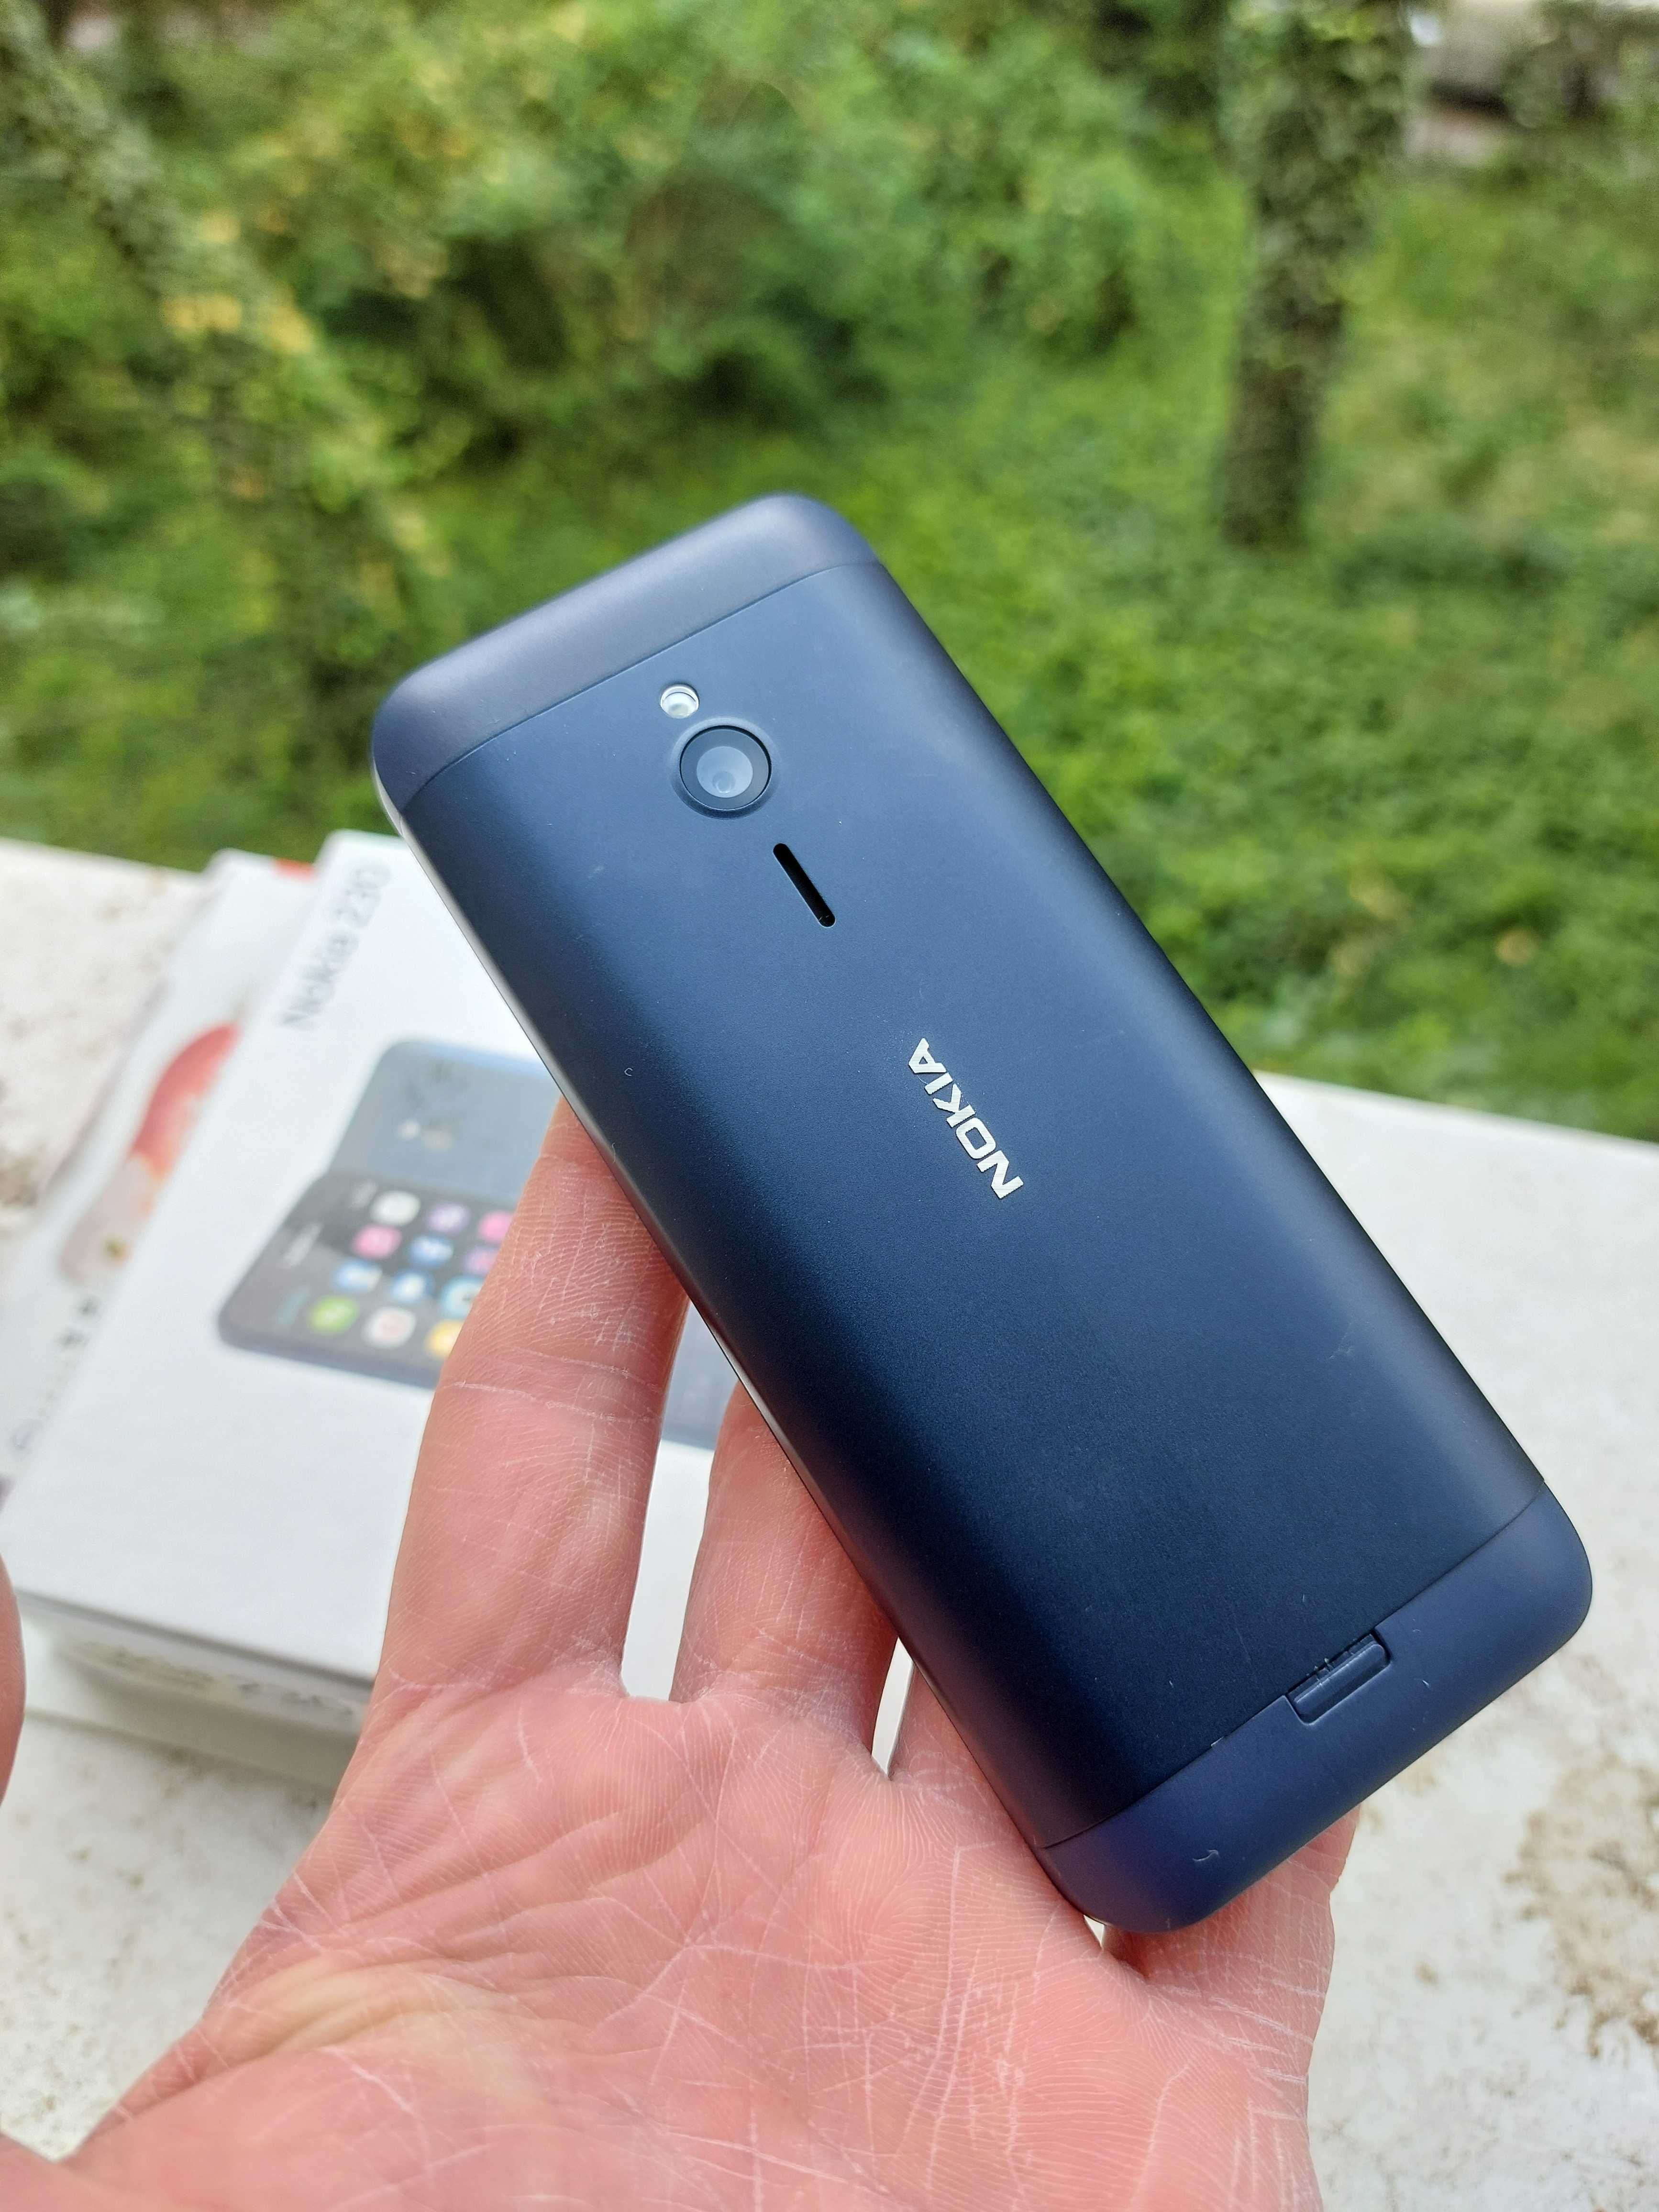 Nokia 230 negru decodat model an 2017 Nou in cutie atentie lifetimer